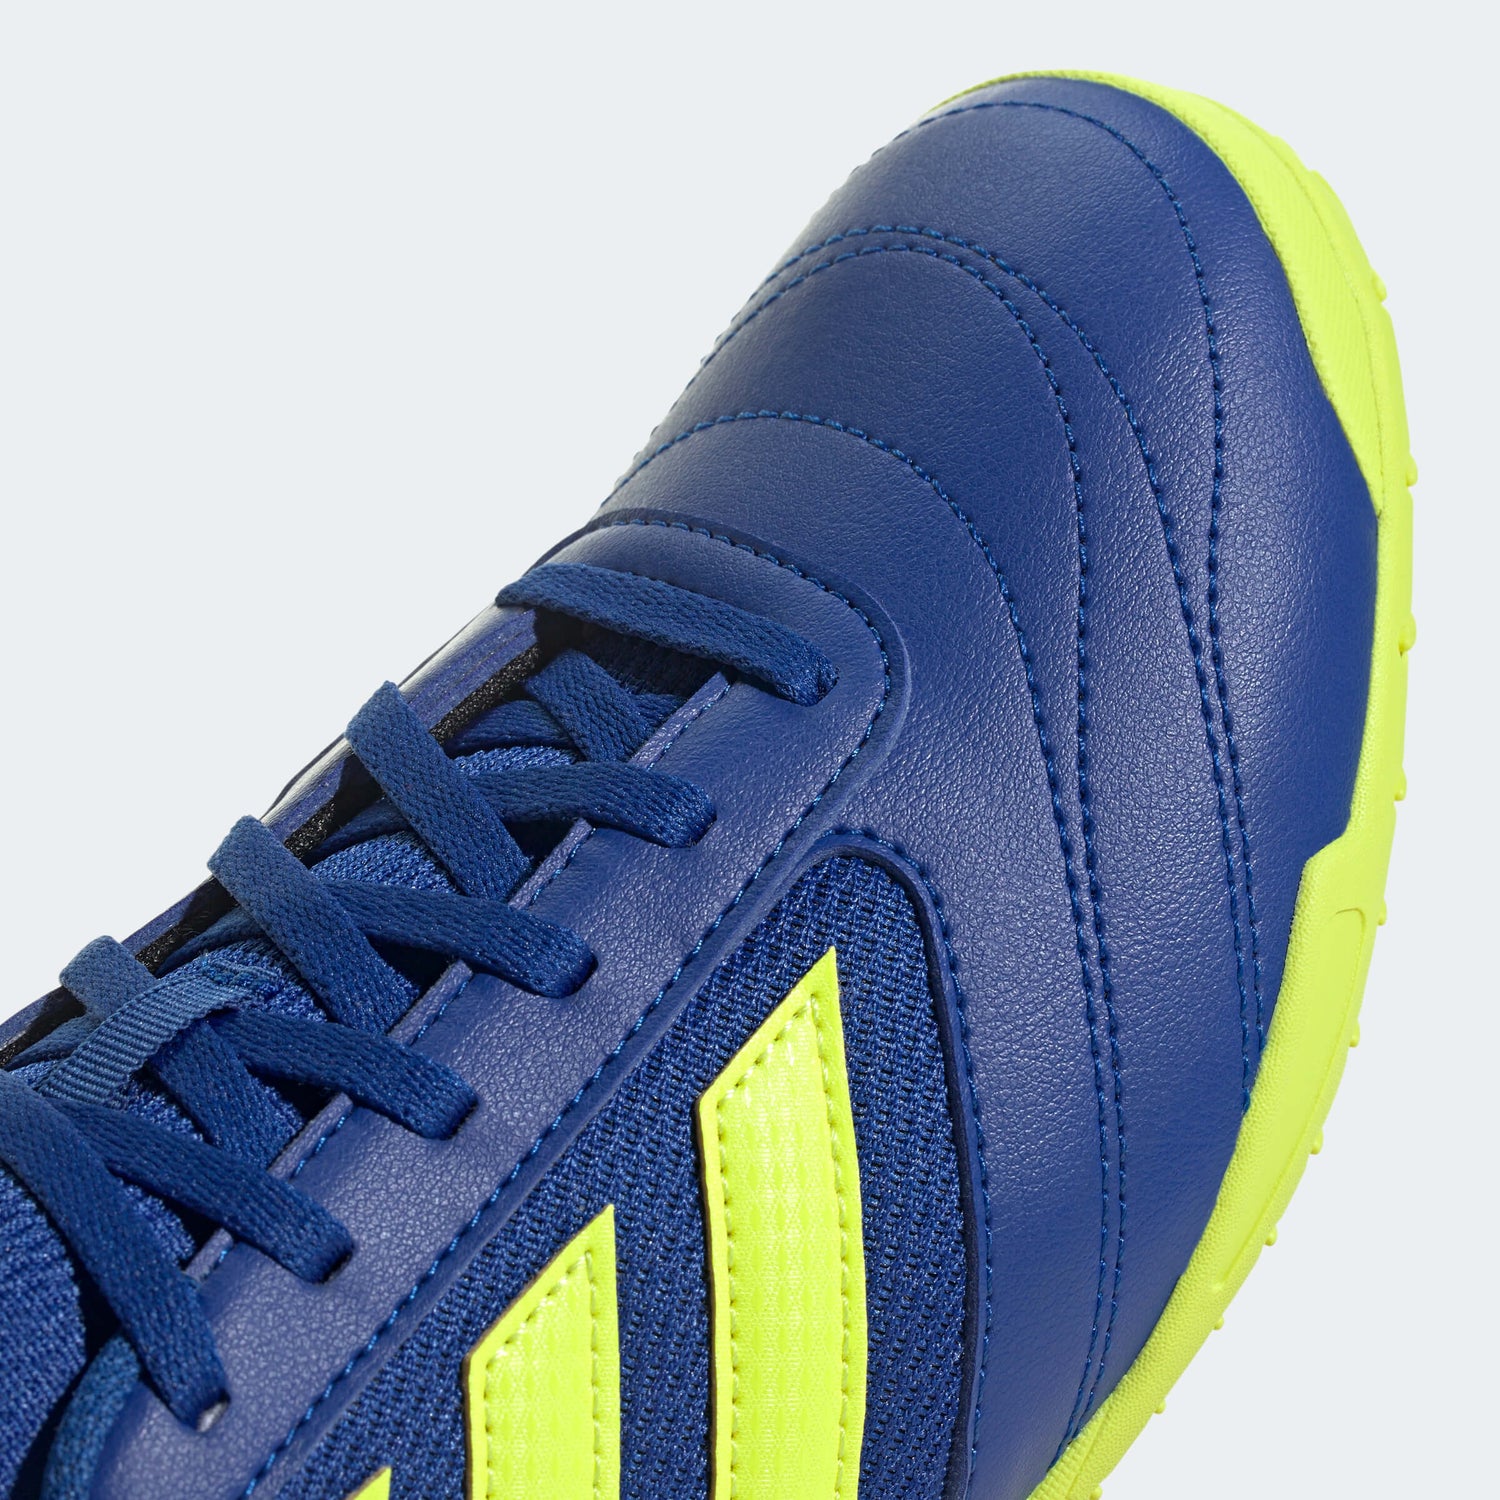 Adidas Super Sala 2 Indoor - Royal Blue - Solar Yellow (Detail 1)